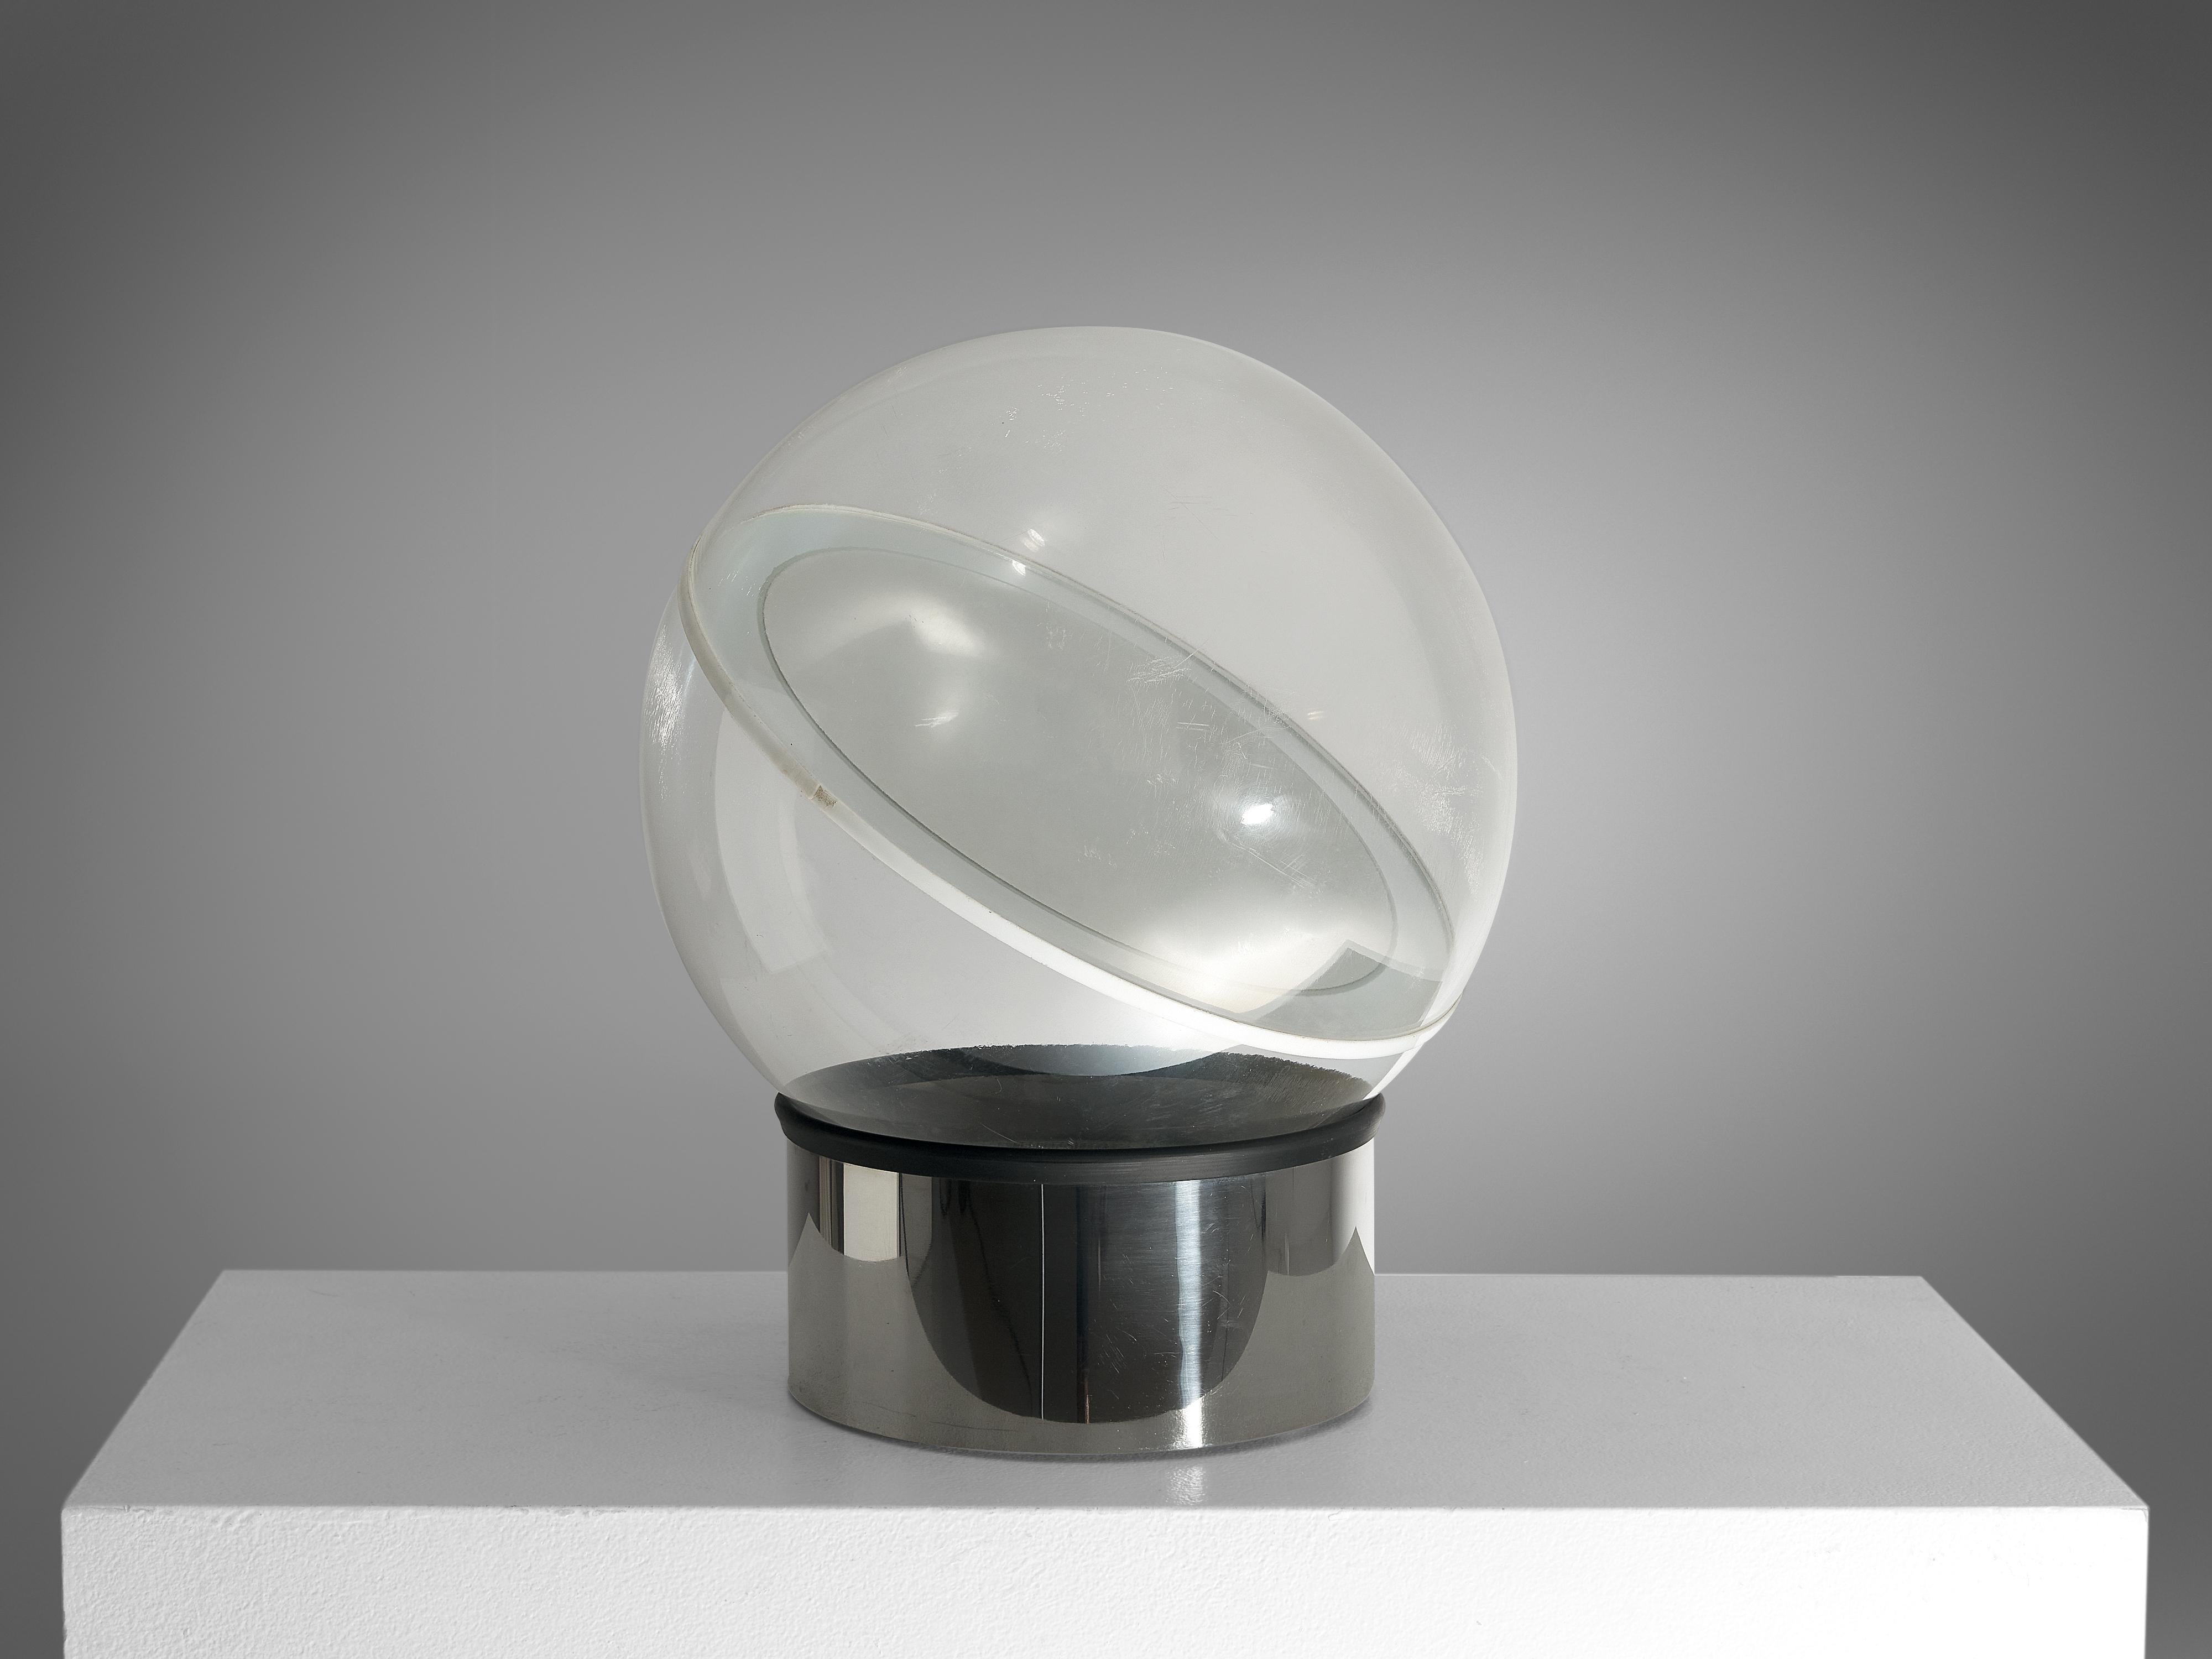 Brass Filippo Panseca for Kartell Table Lamp Model '4044' in Chrome and Neon For Sale